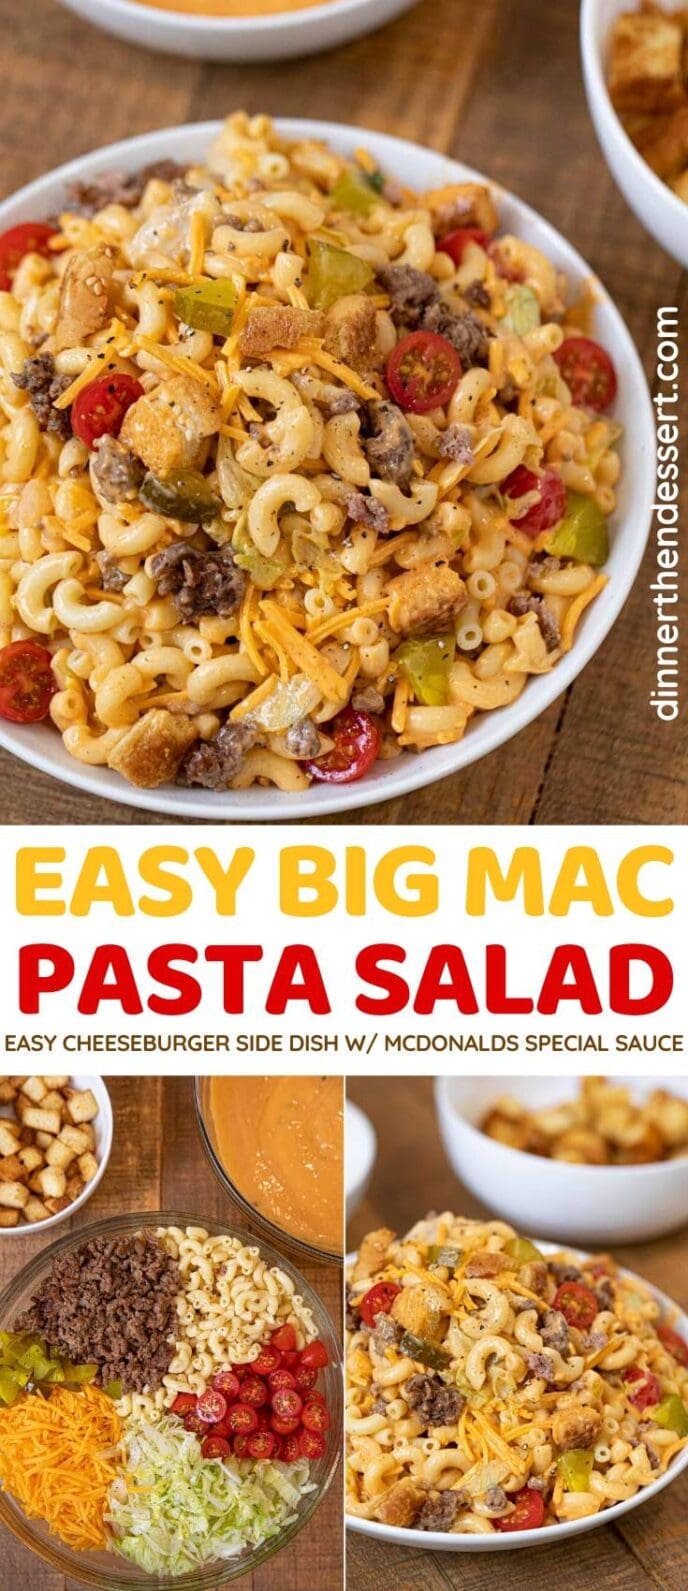 Big Mac Pasta Salad collage